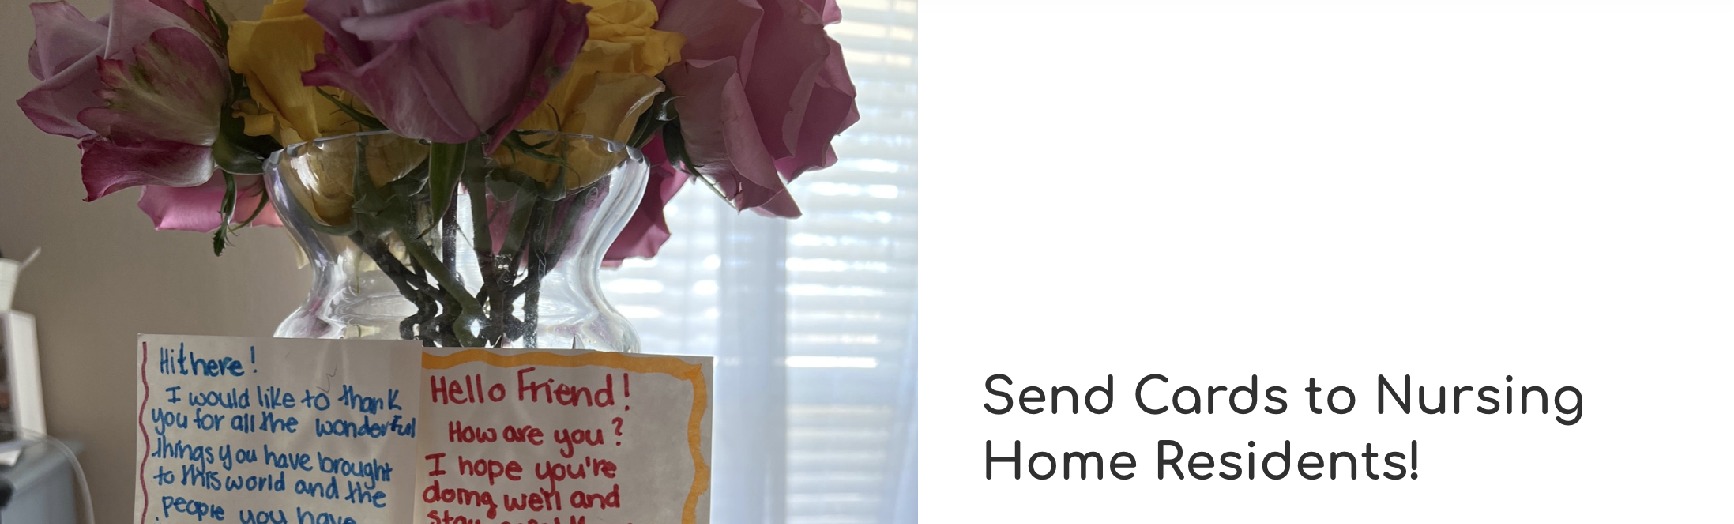 Flowers for Ann – Volunteer with Nursing Home Residents